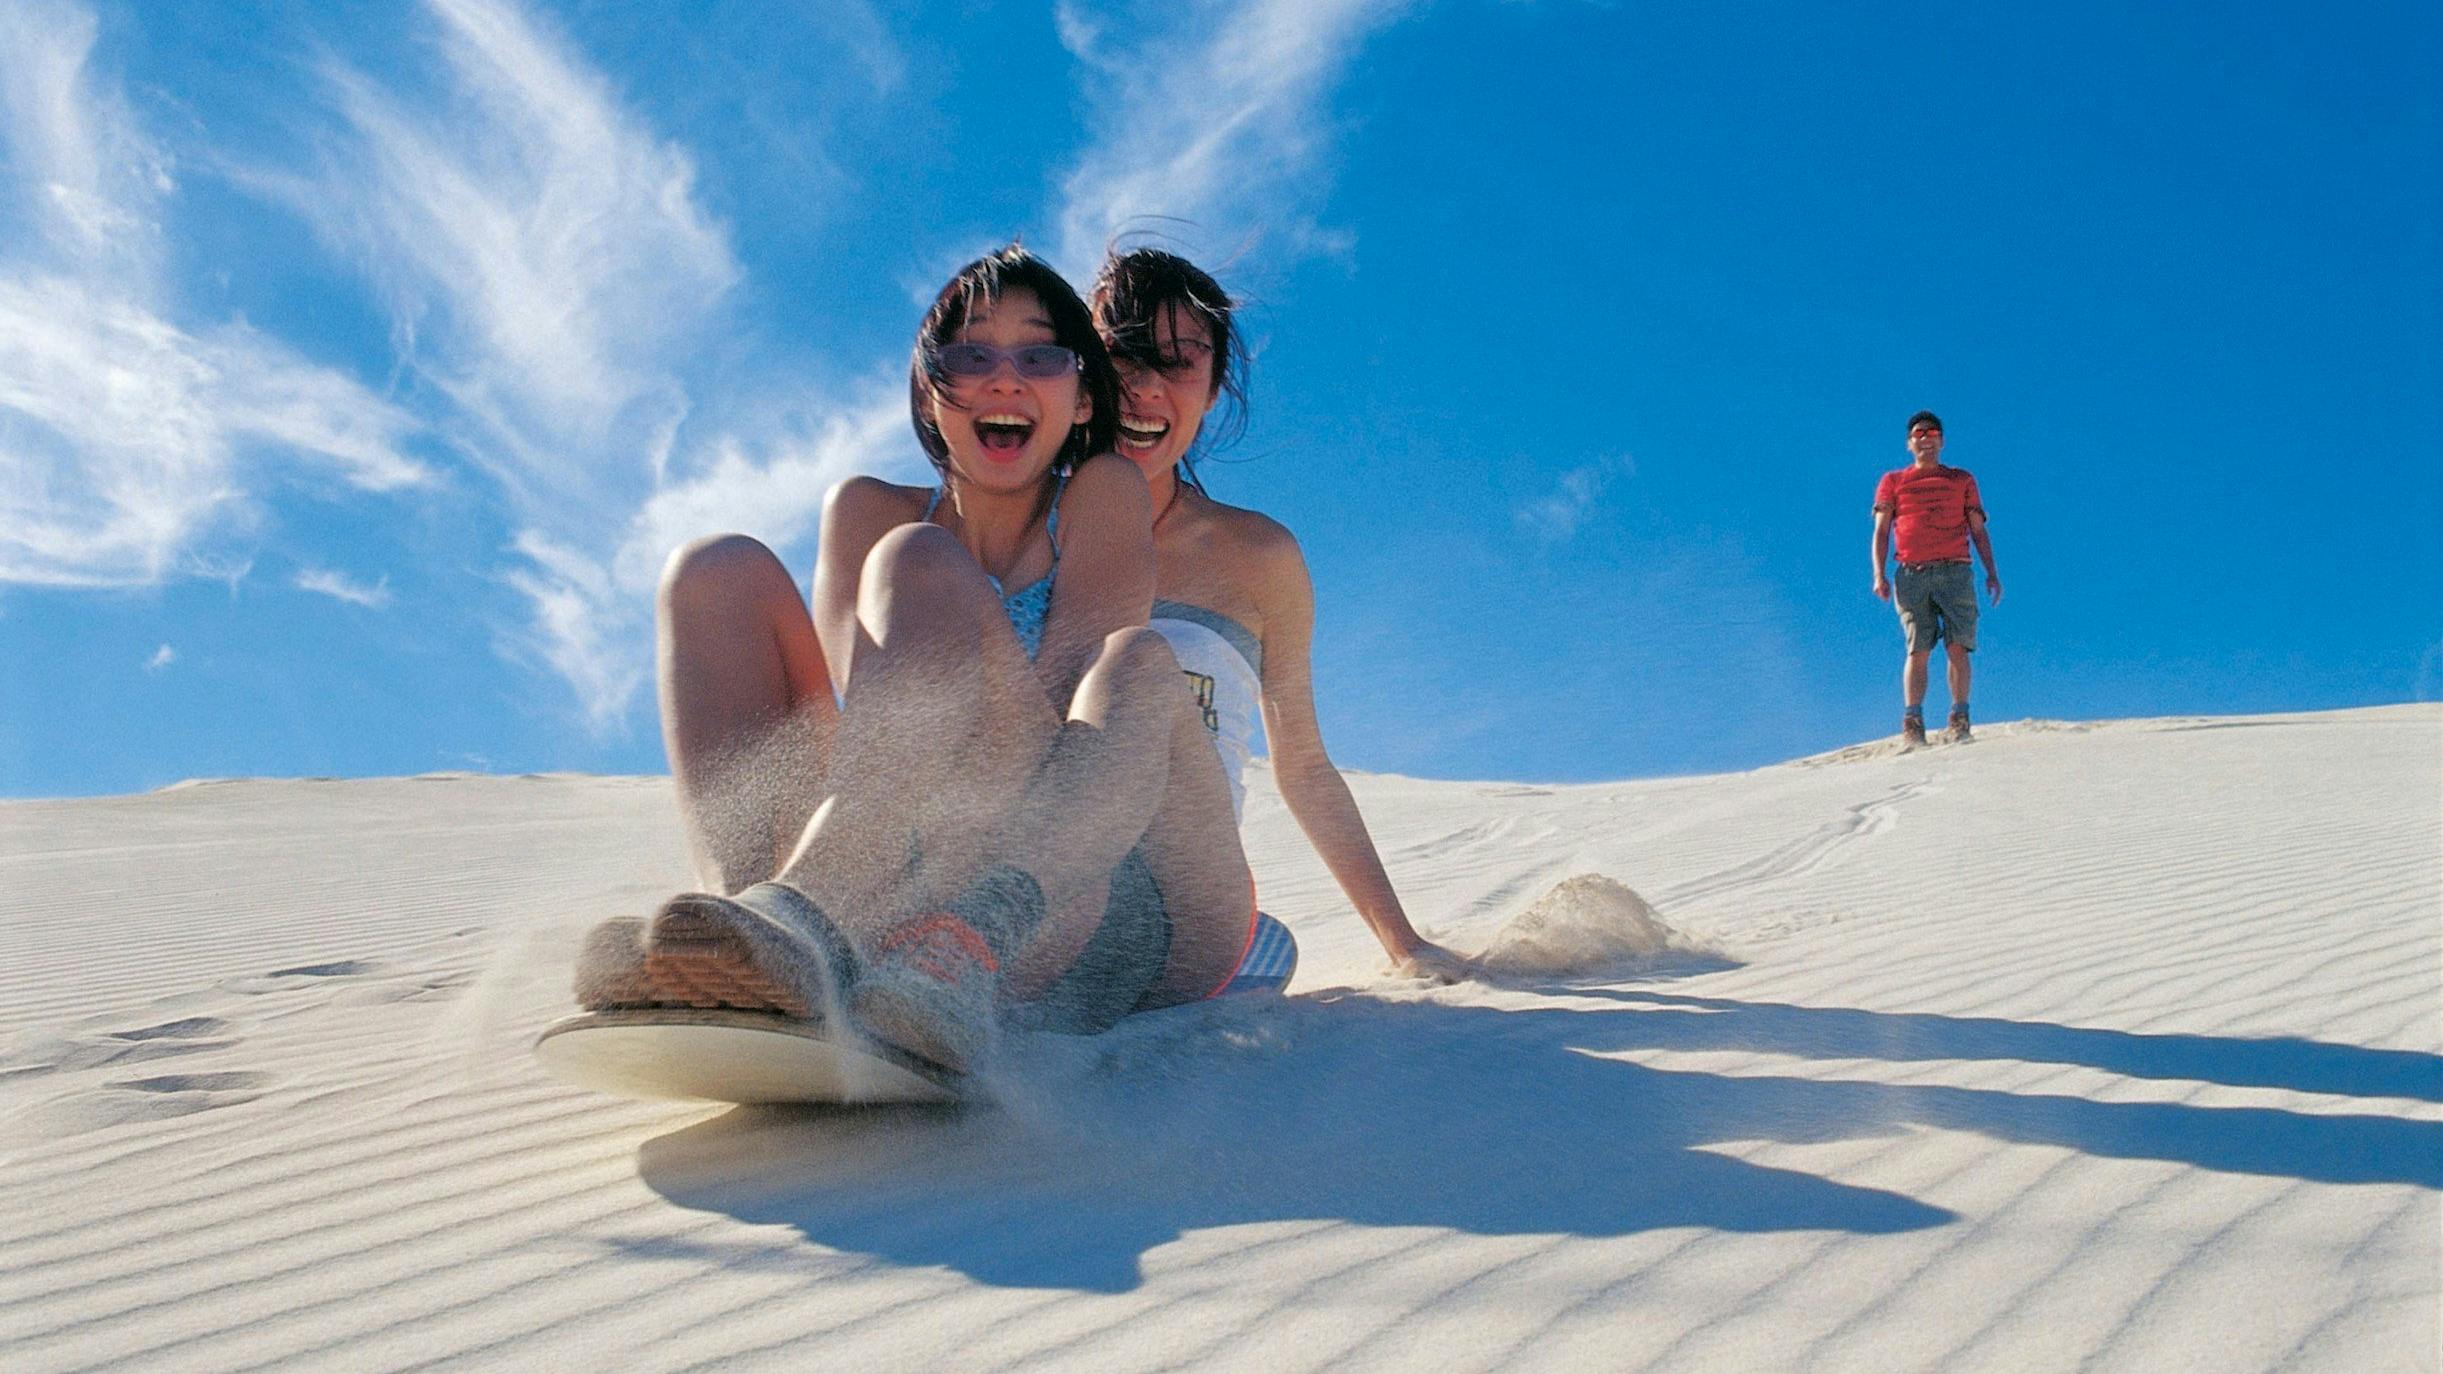 Lancelin Sand Dunes - Attraction - Tourism Western Australia